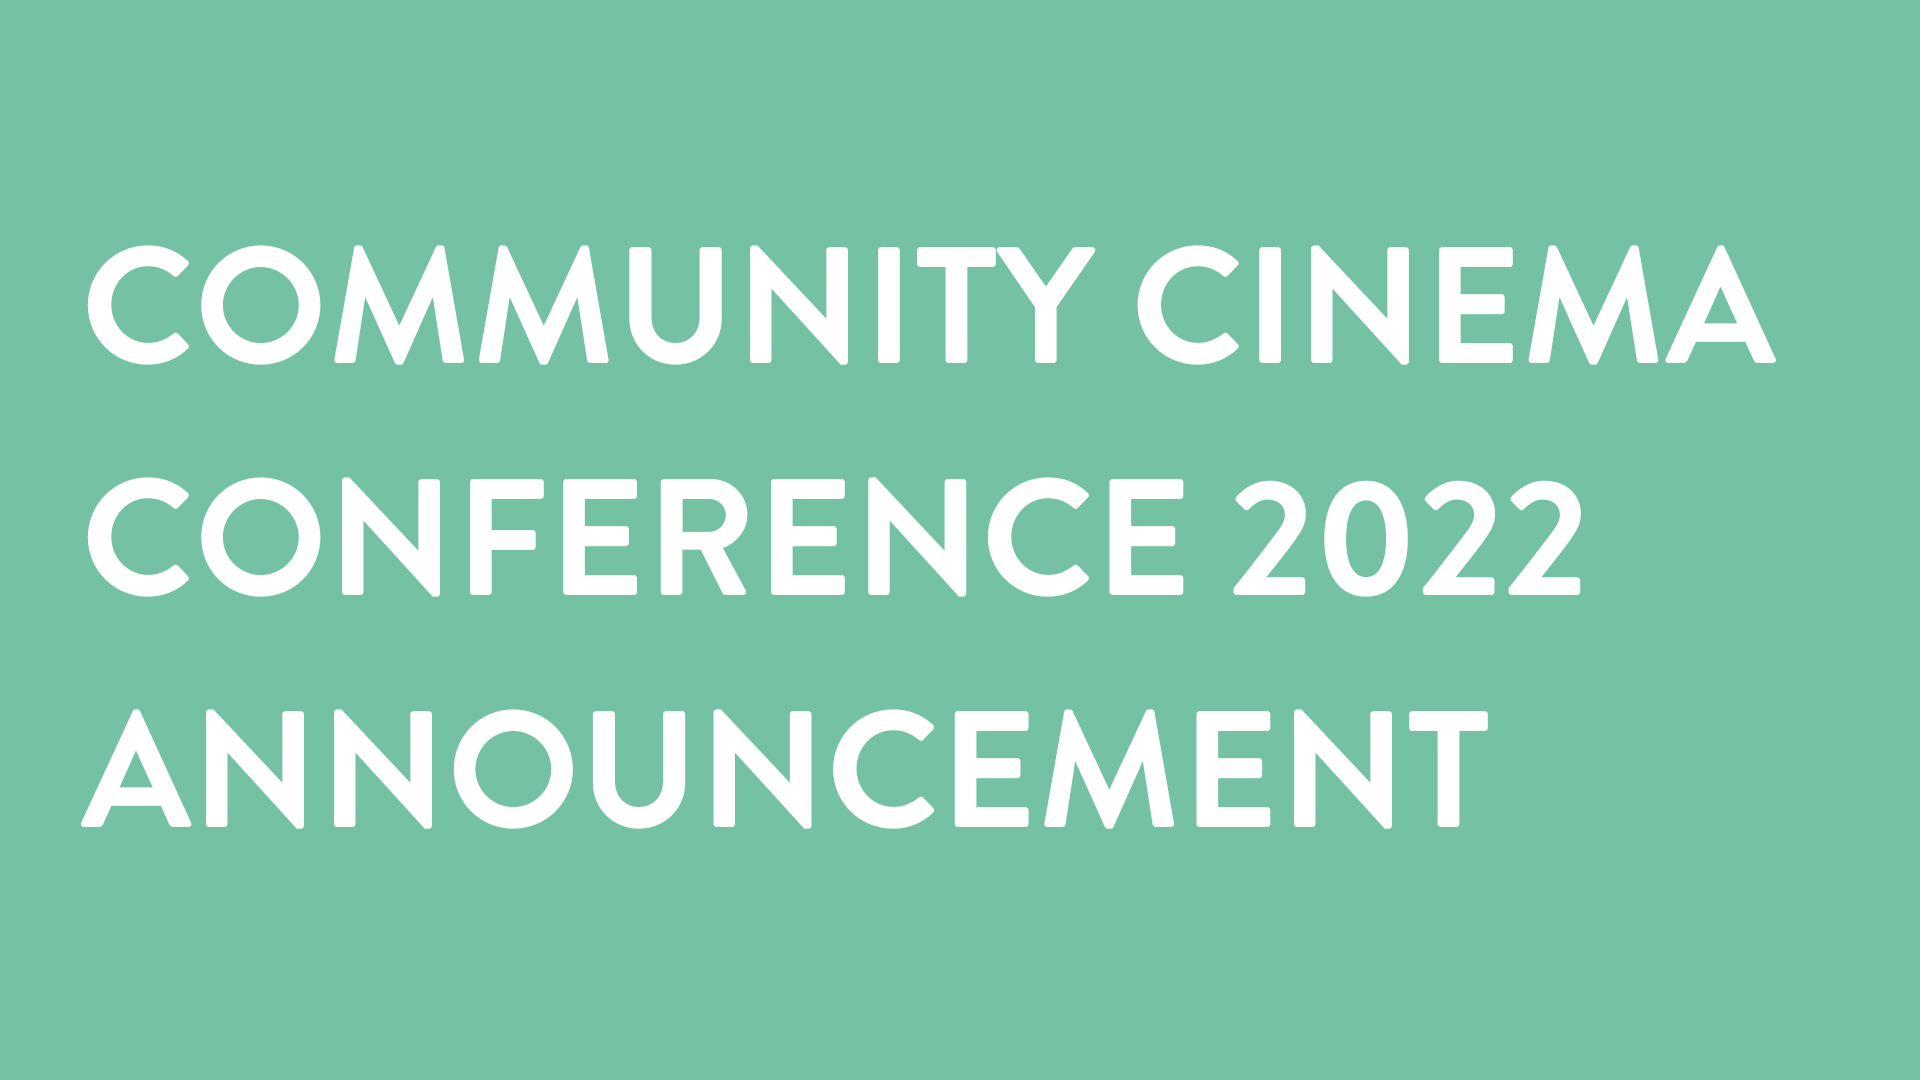 Community Cinema Conference Announcement headshot